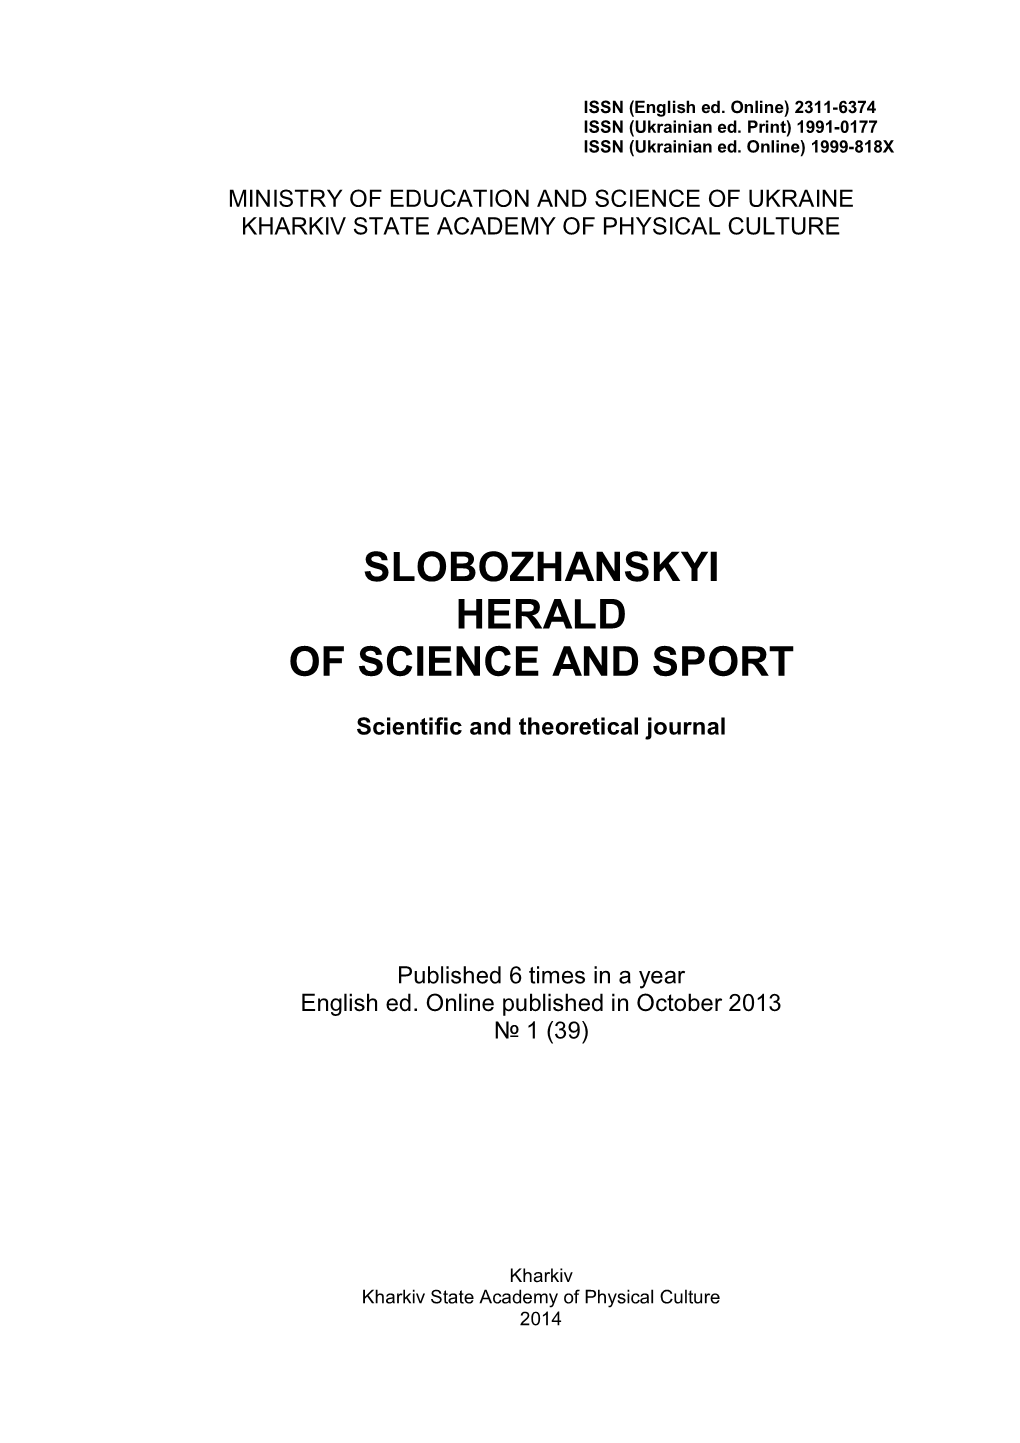 Slobozhanskyi Herald of Science and Sport